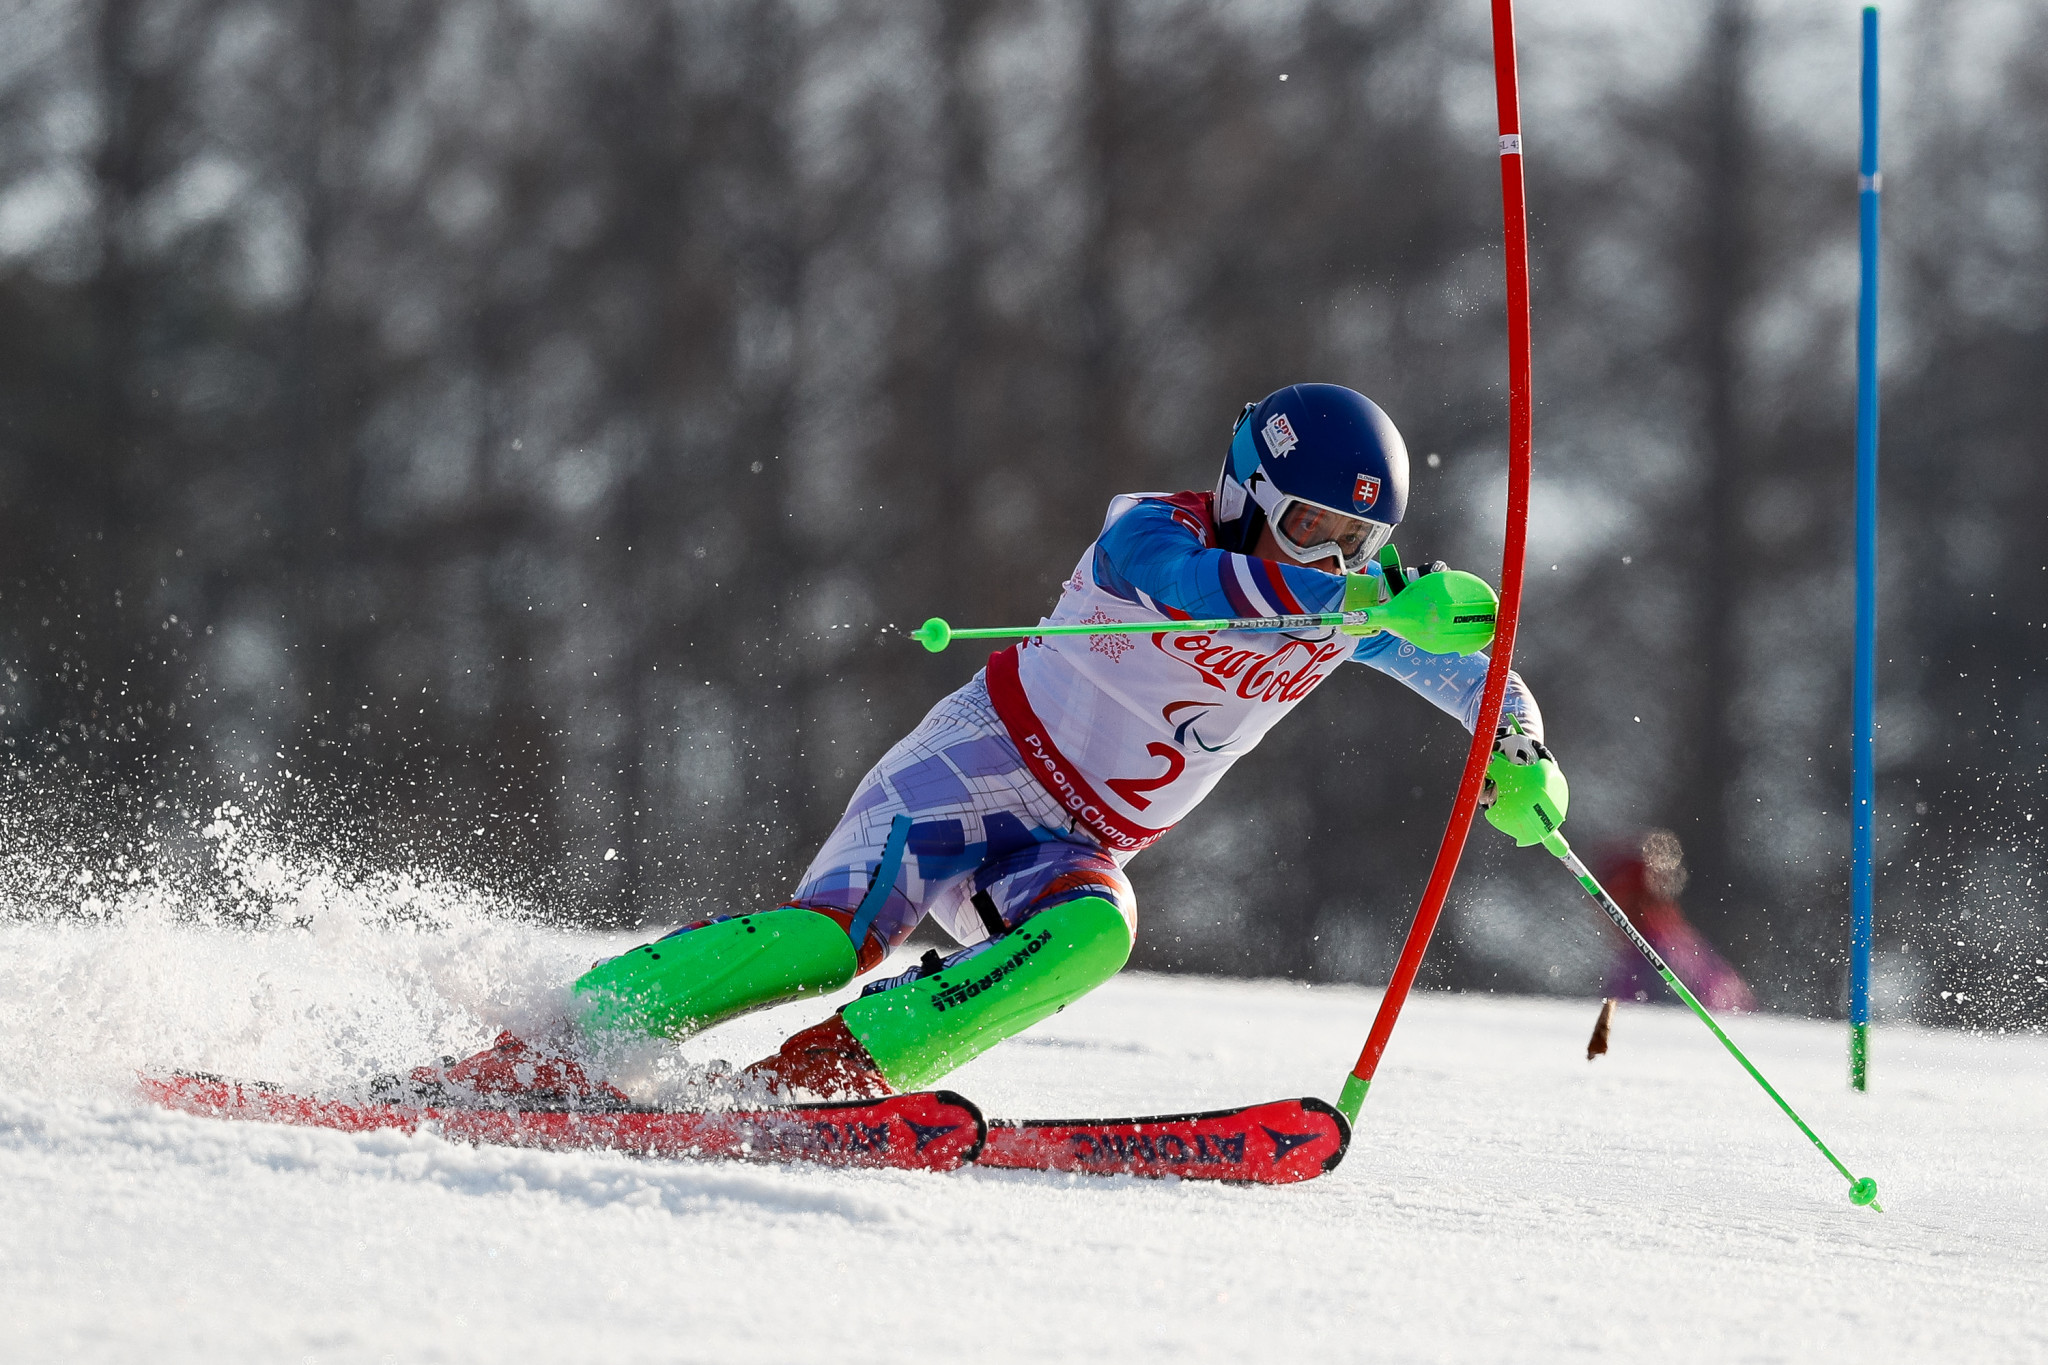 Slovakia's Haraus caps off World Para Alpine Skiing World Cup season with victory